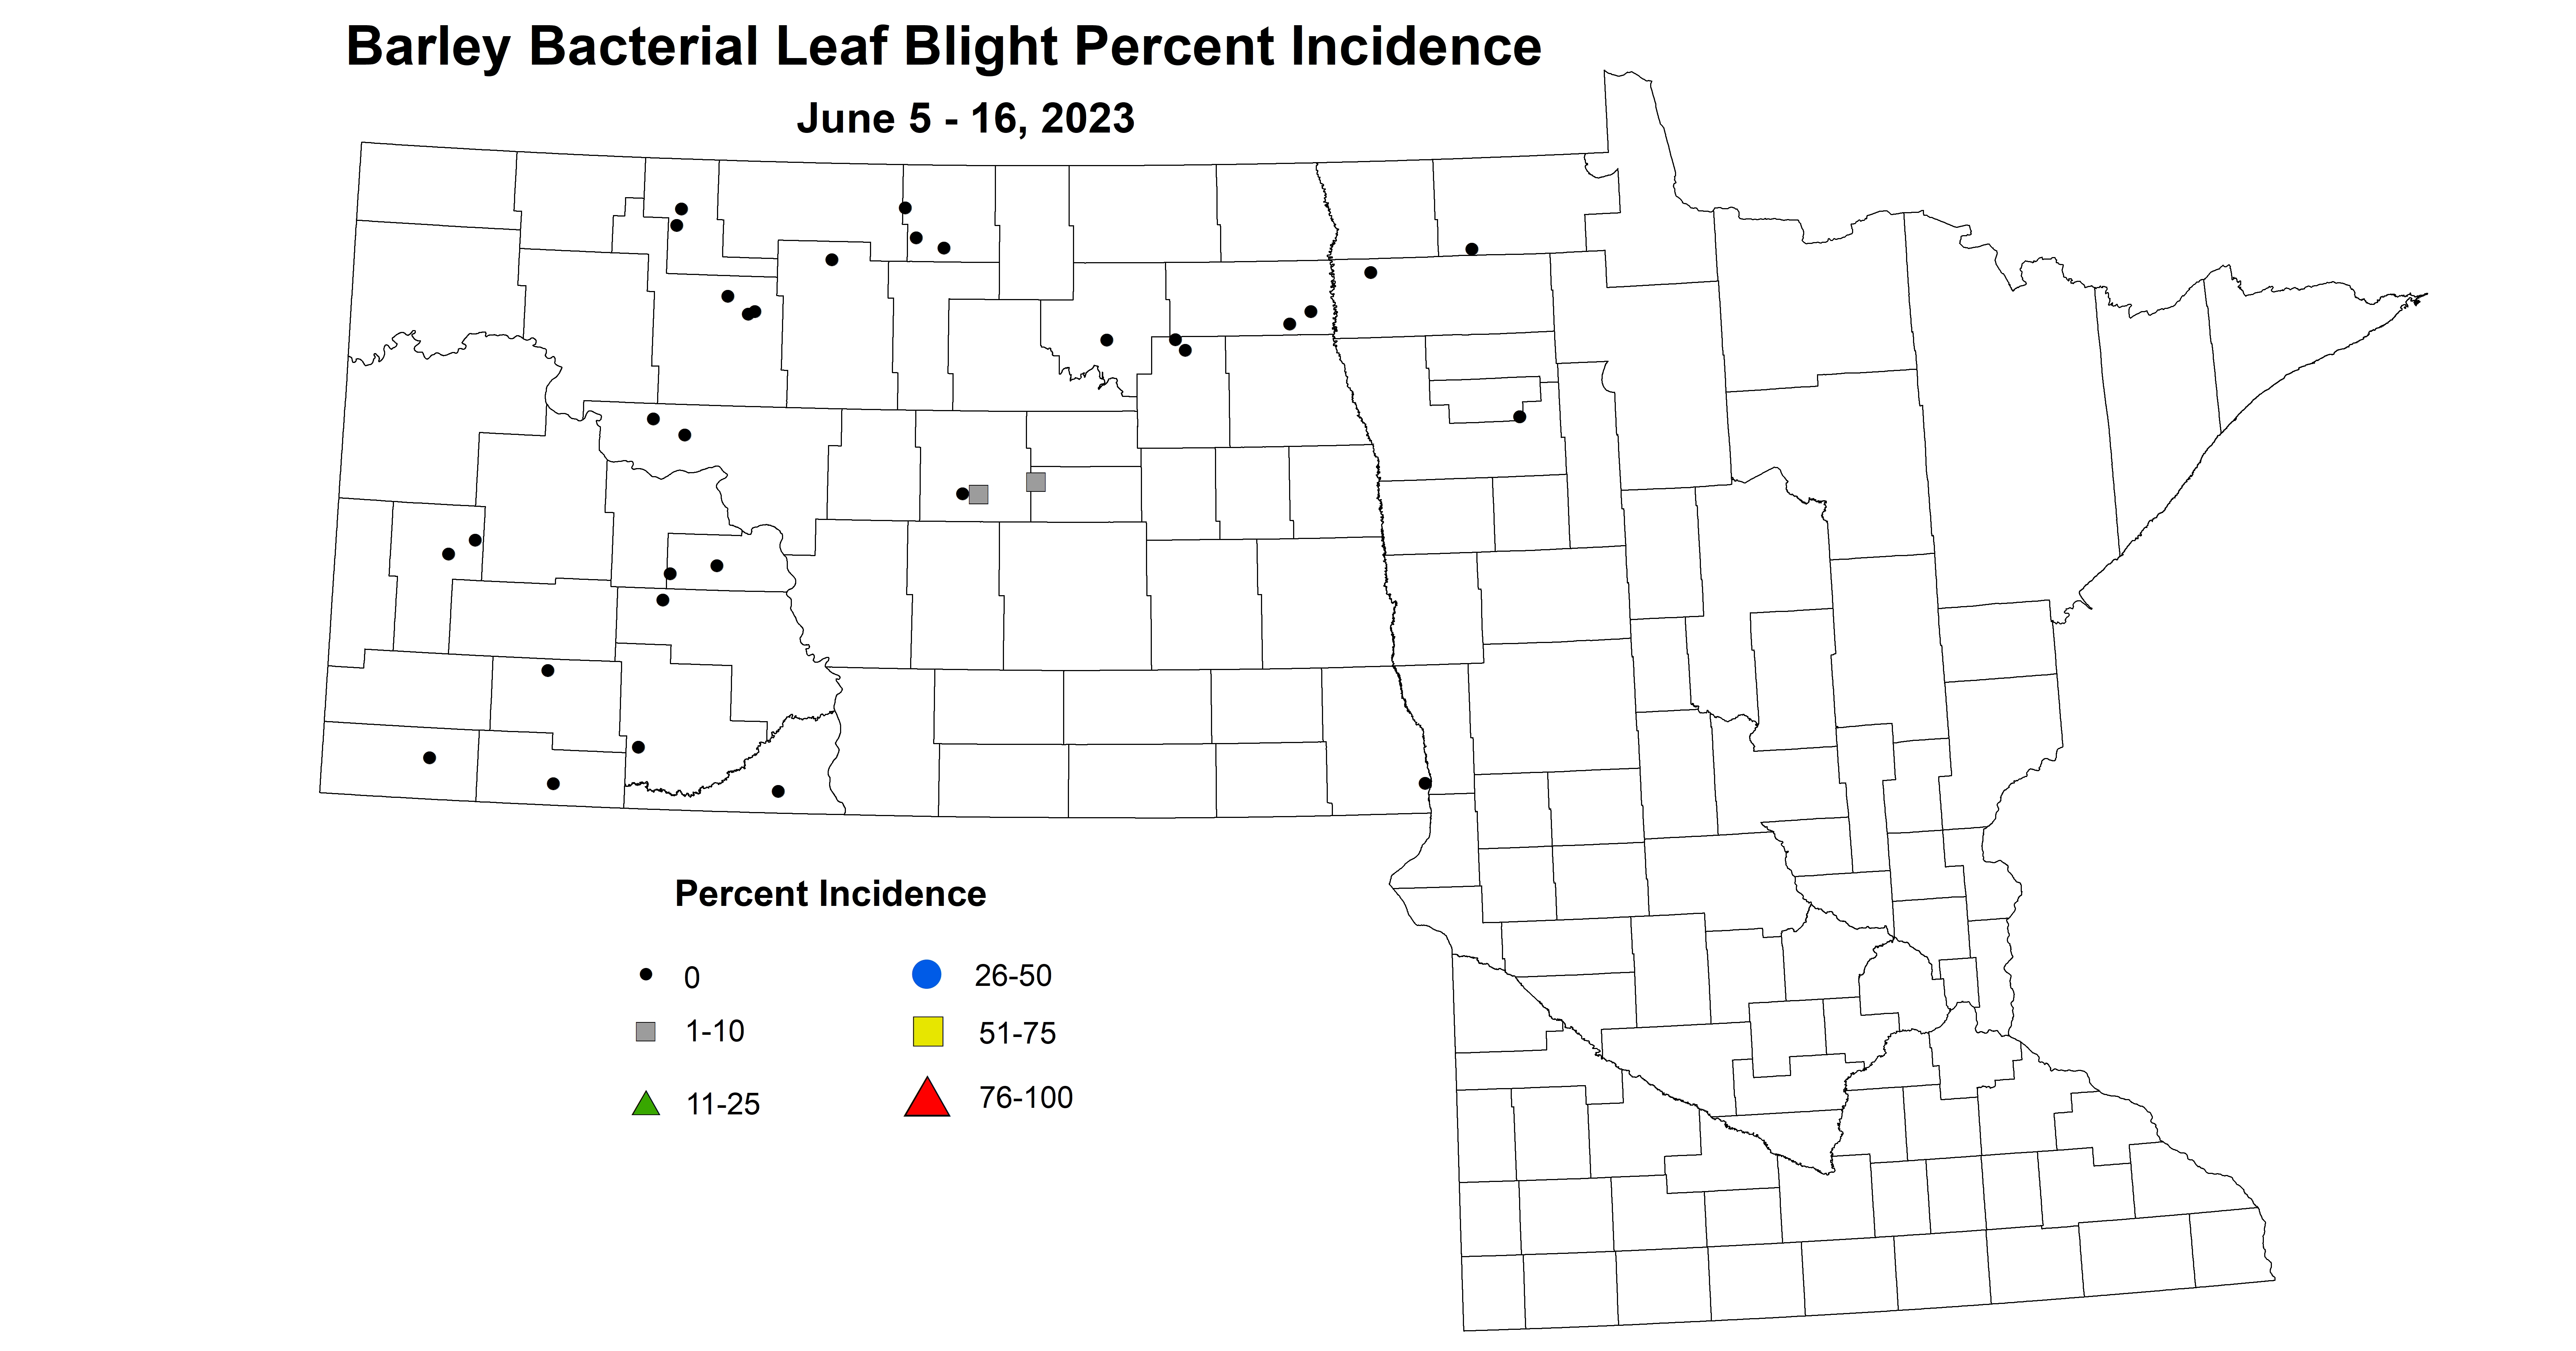 barley bacterial leaf blight percent incidence June 5-16 2023